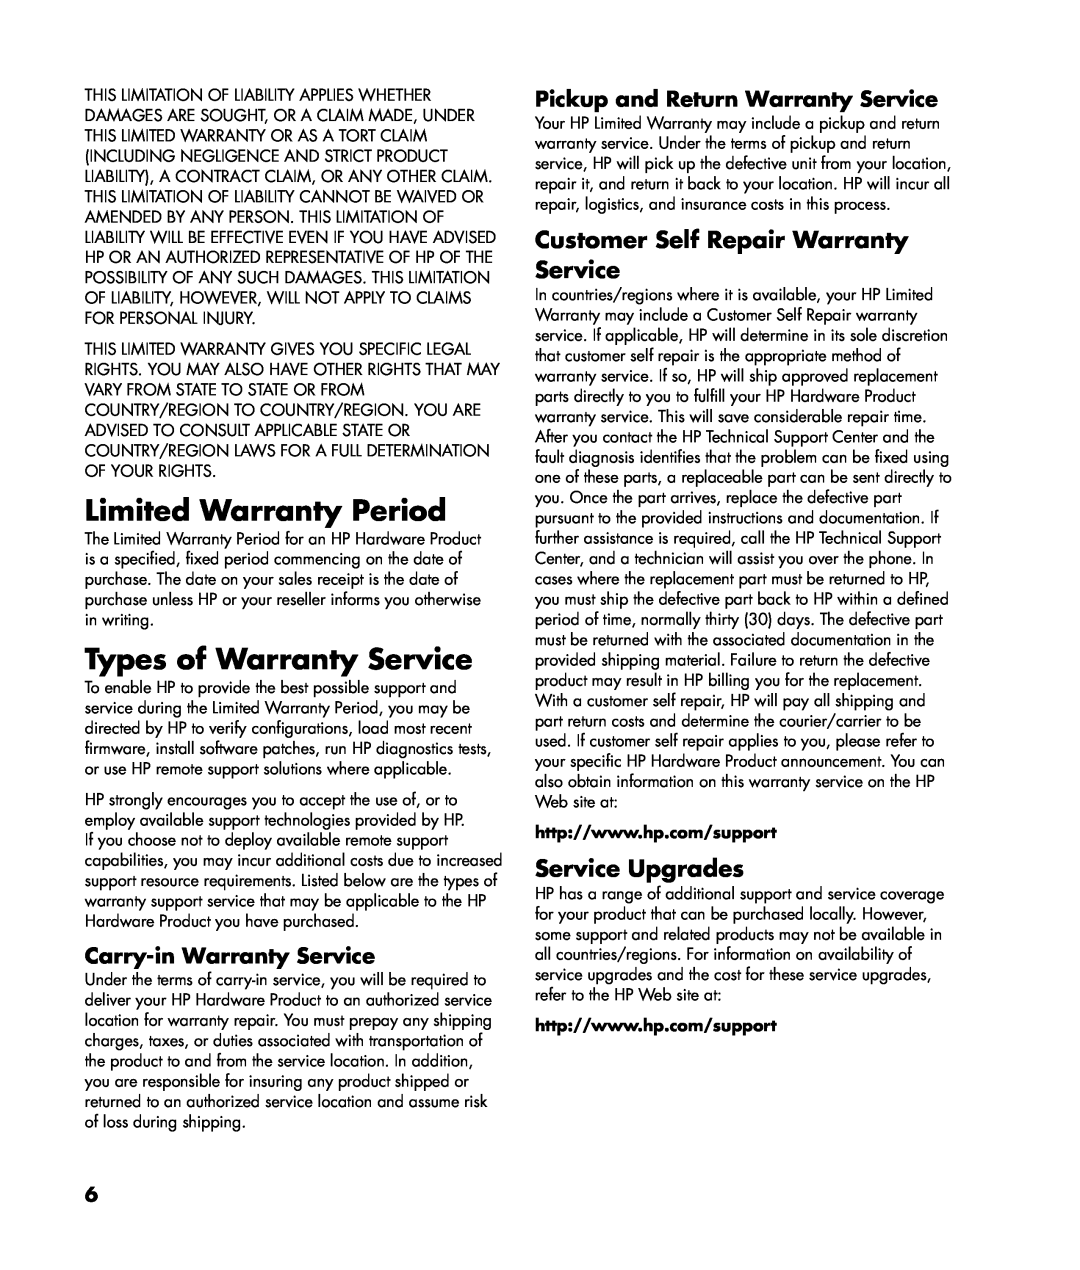 HP a1100n Limited Warranty Period, Types of Warranty Service, Customer Self Repair Warranty Service, Service Upgrades 